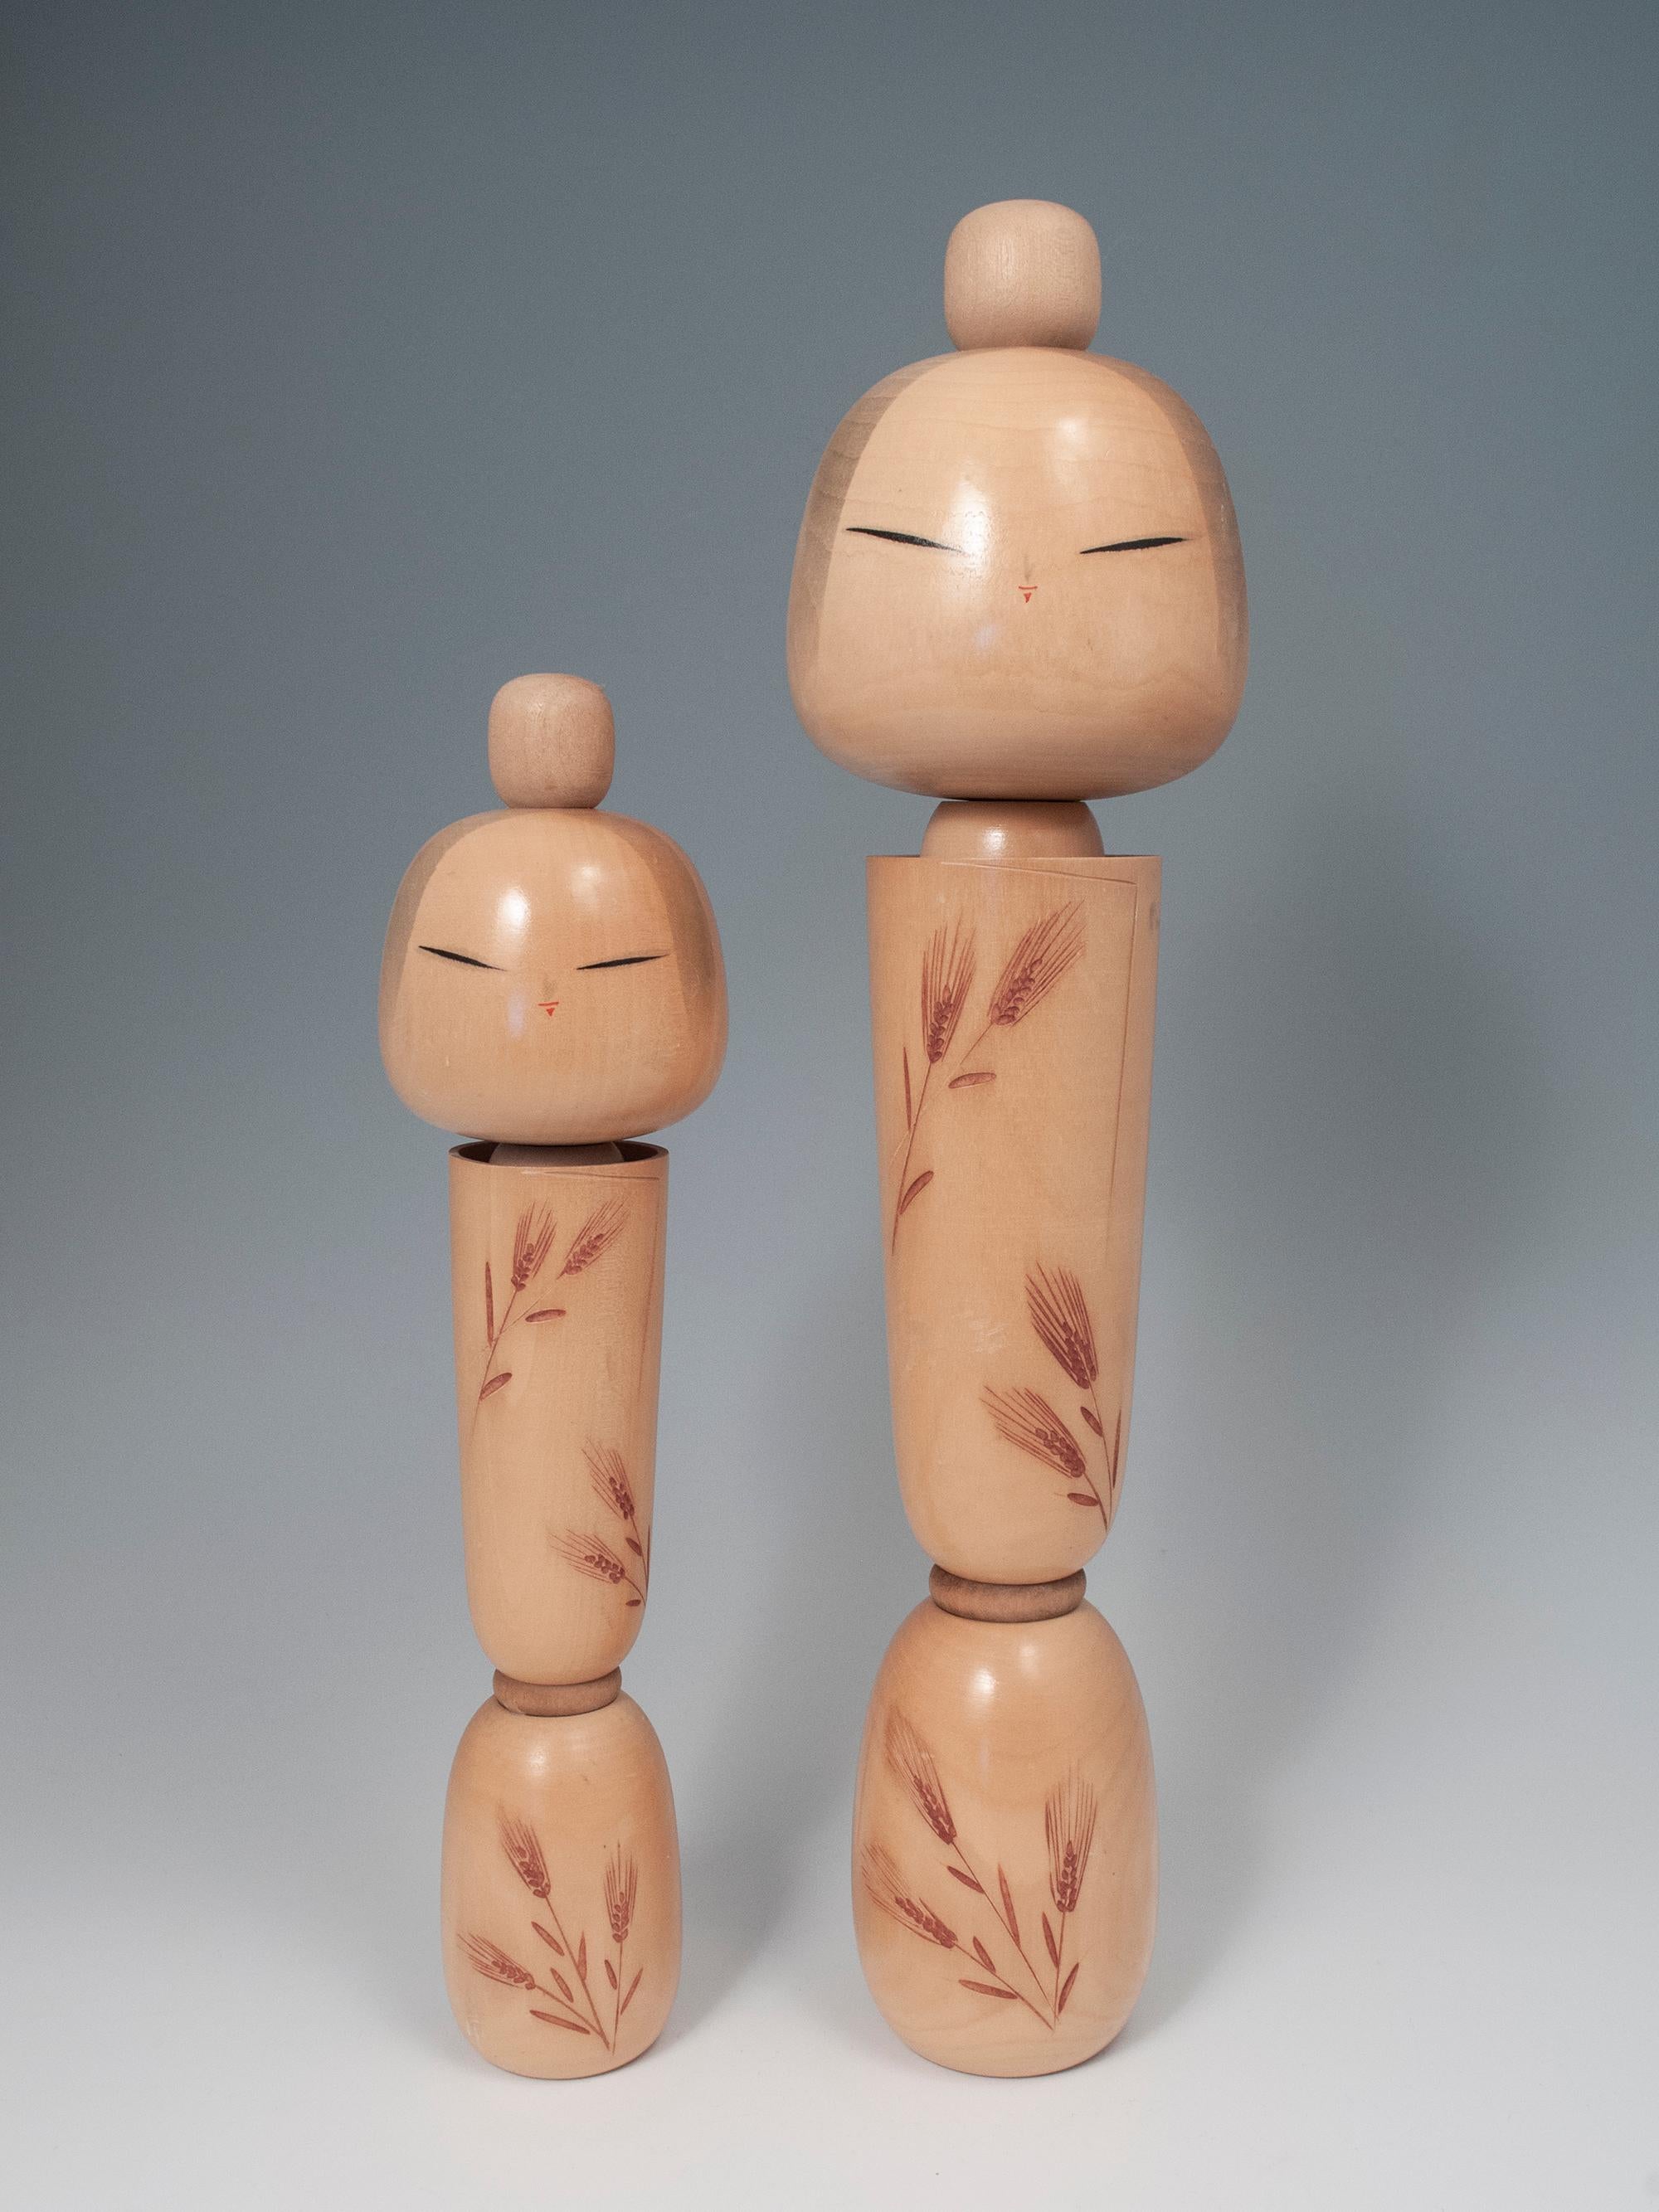 Pair of 1960s Modern Creative Kokeshi Dolls by Sadao Kishi, Japan

Sadao Kishi (1932-1998) was in the vanguard of the Sosaku Kokeshi Movement, receiving numerous awards during his career. In 1968, he won the Prime Minister's Award for the design of